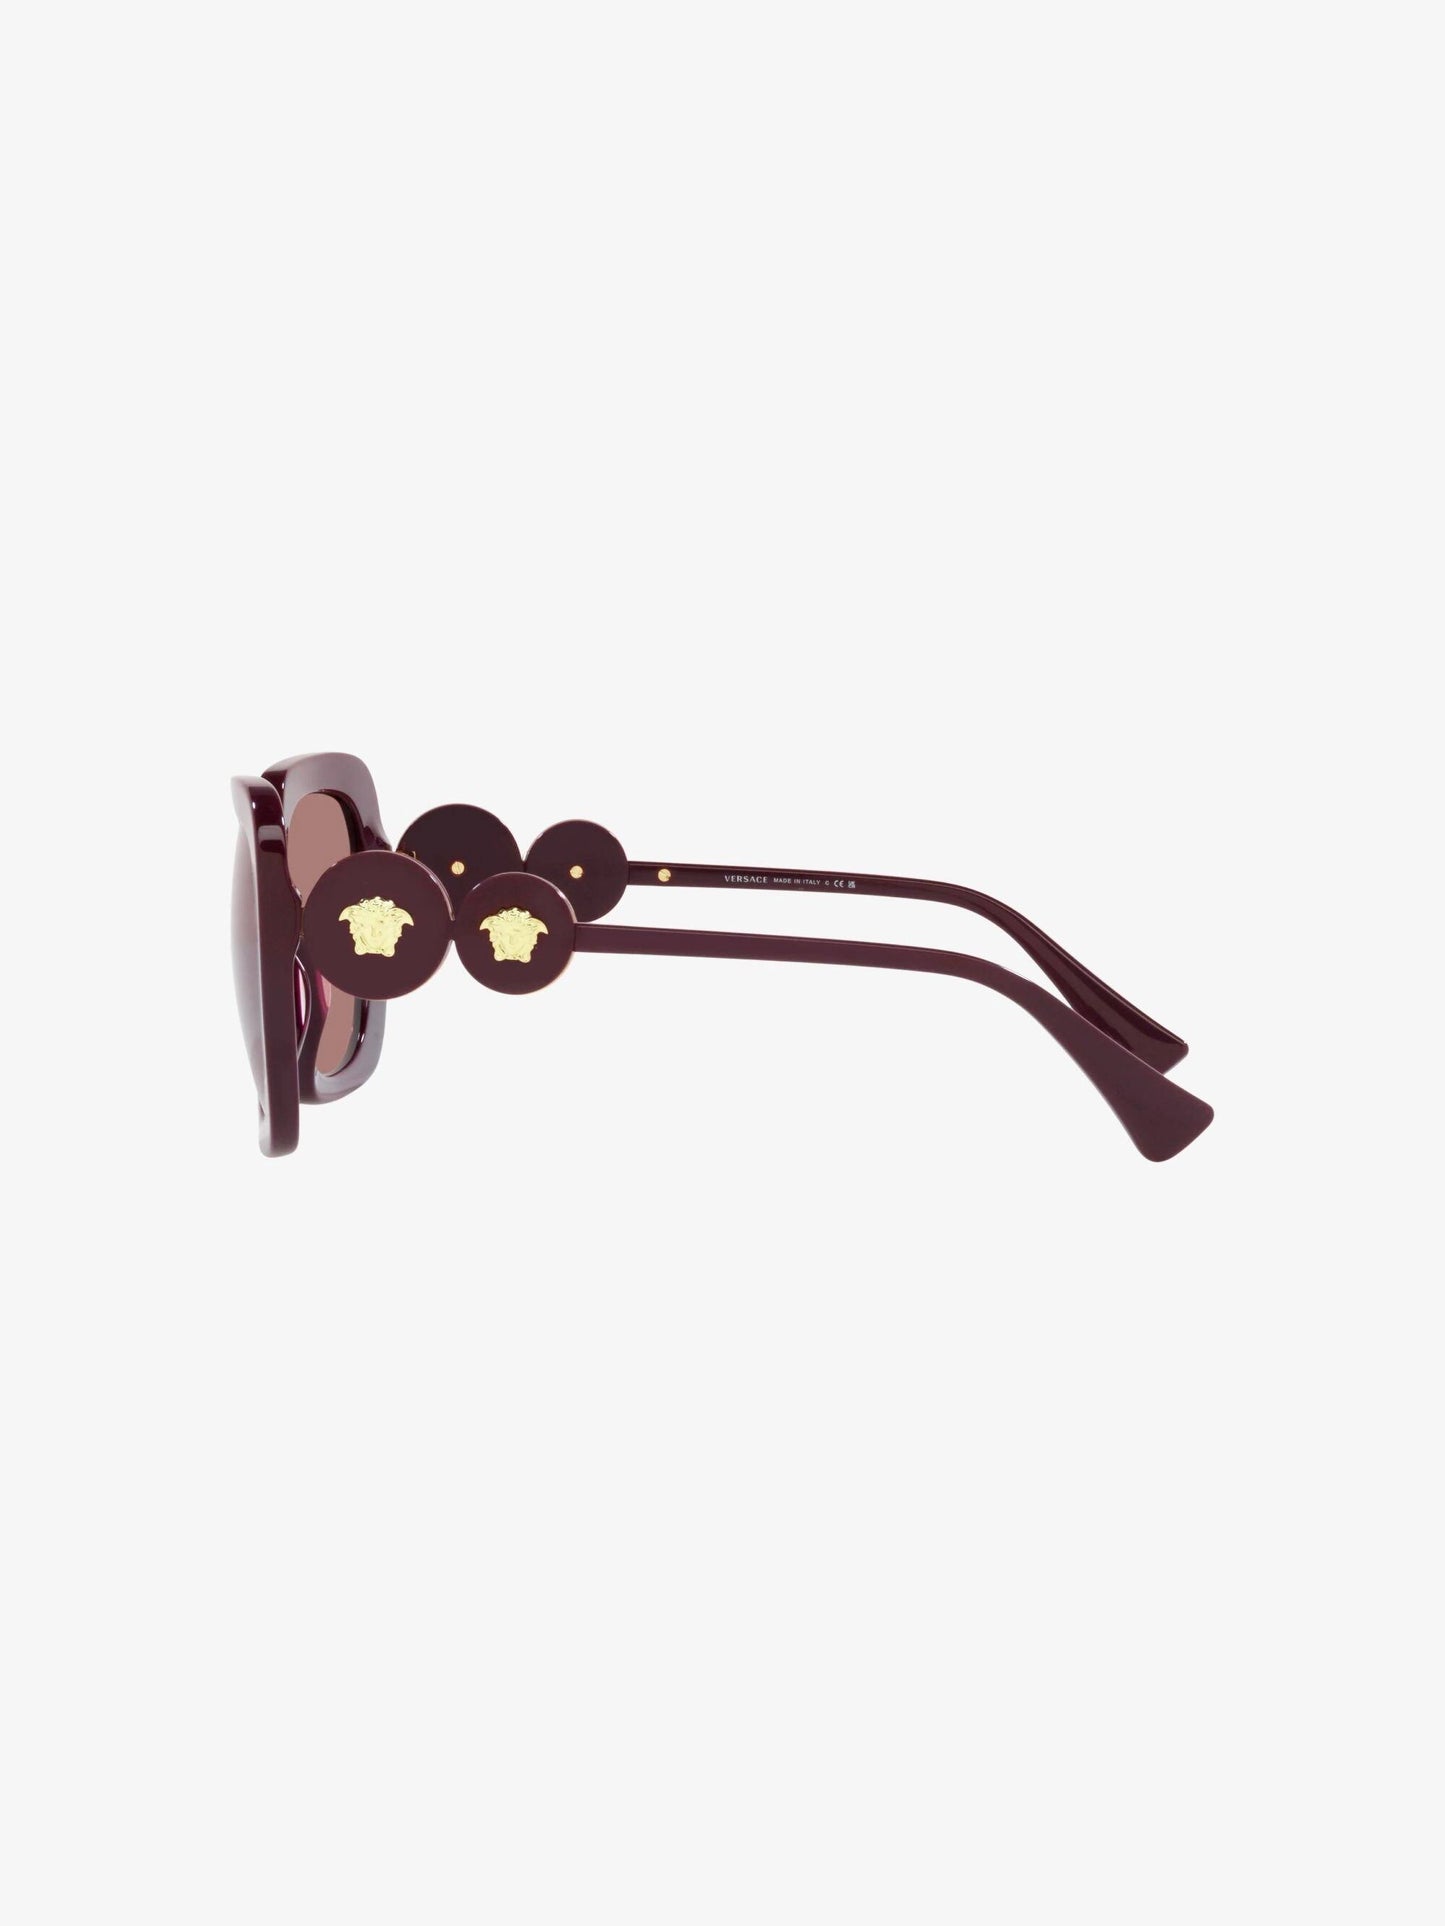 Versace 0VE4434-538273 54mm New Sunglasses